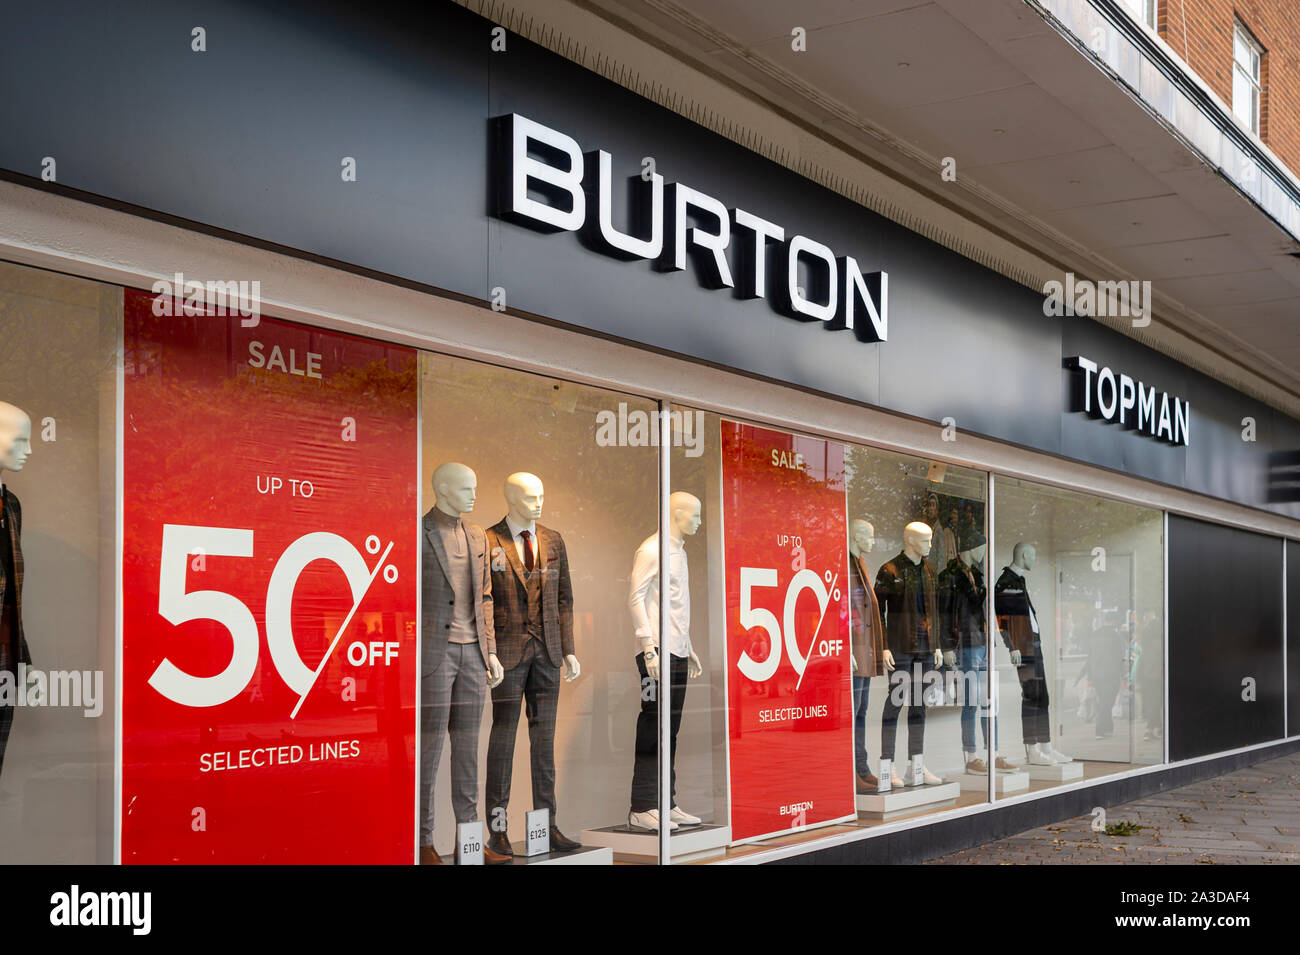 Topman Burton exterior, 50% sale signs Stock Photo